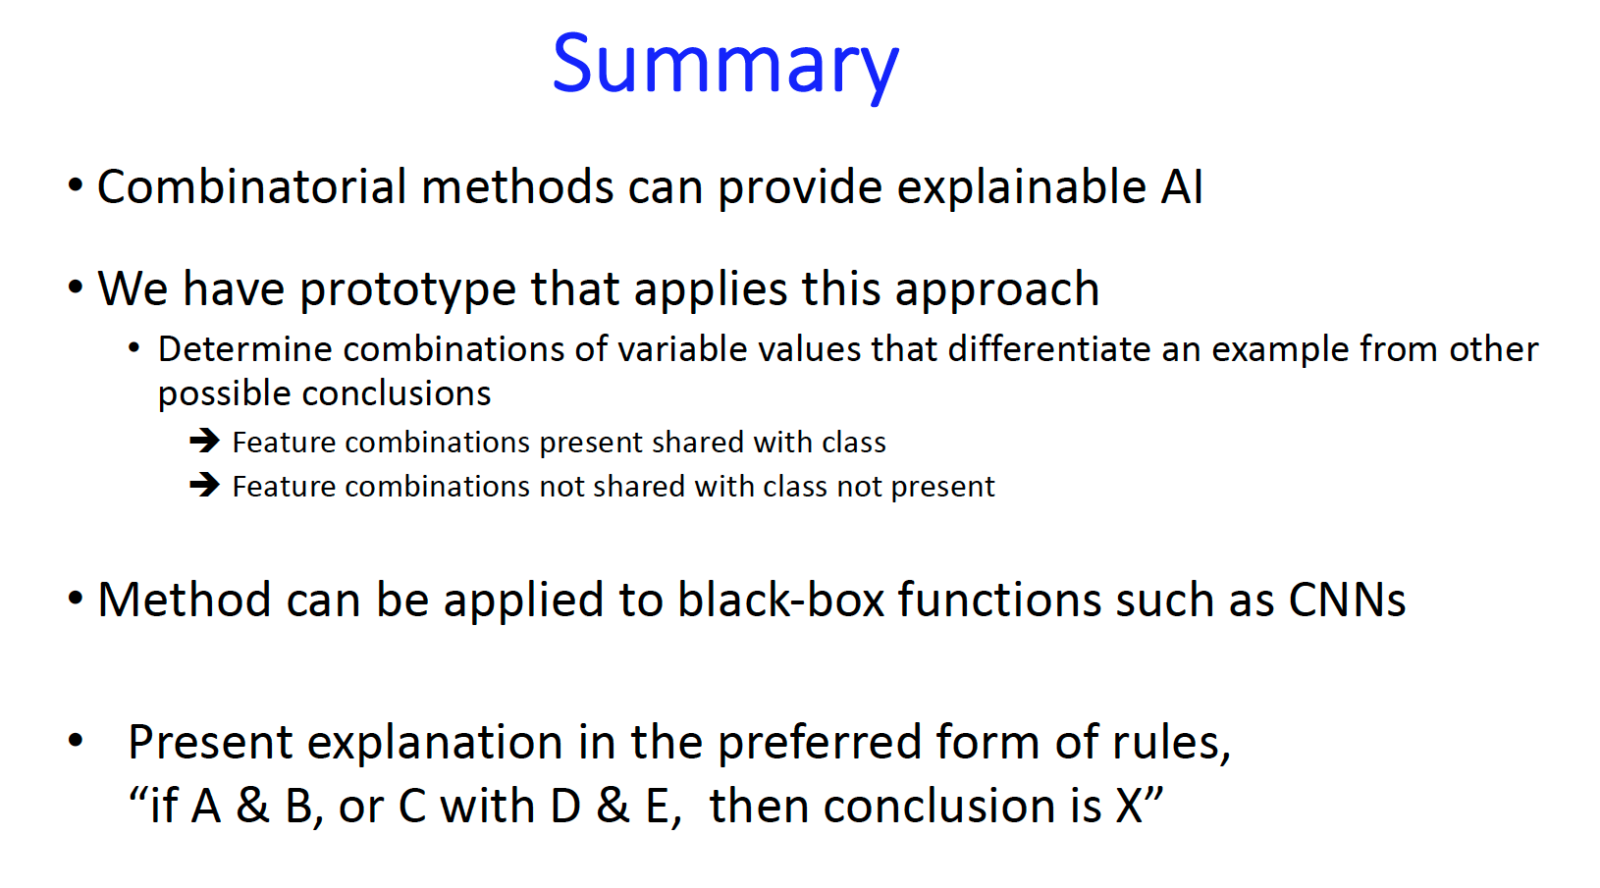 Summary, combinatorial methods and explainable AI